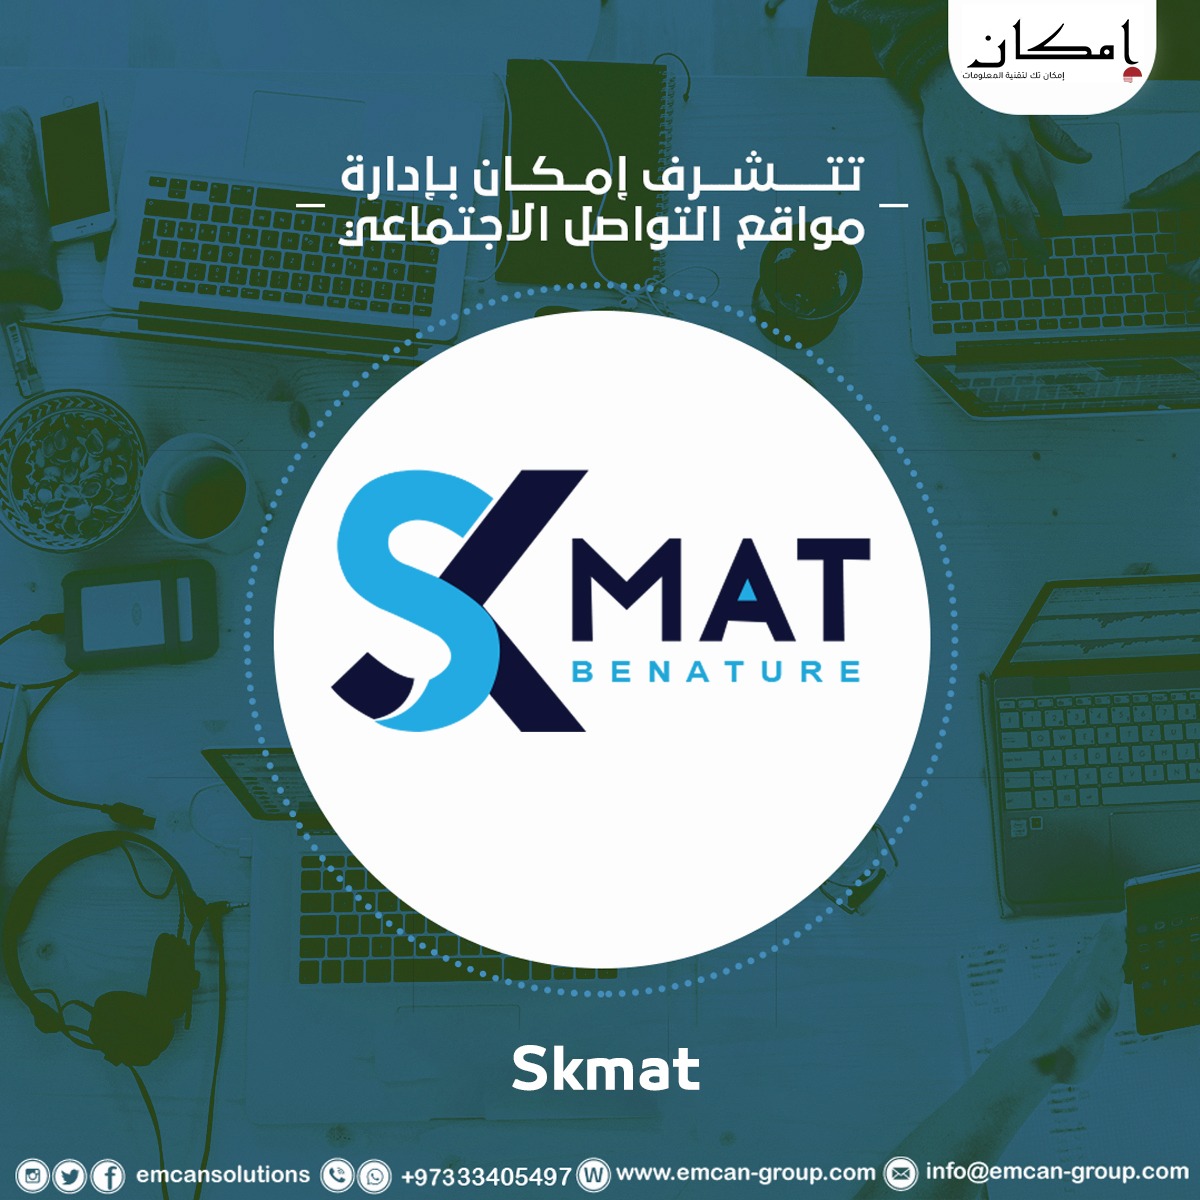 Social Media Management for SKMAT Benature